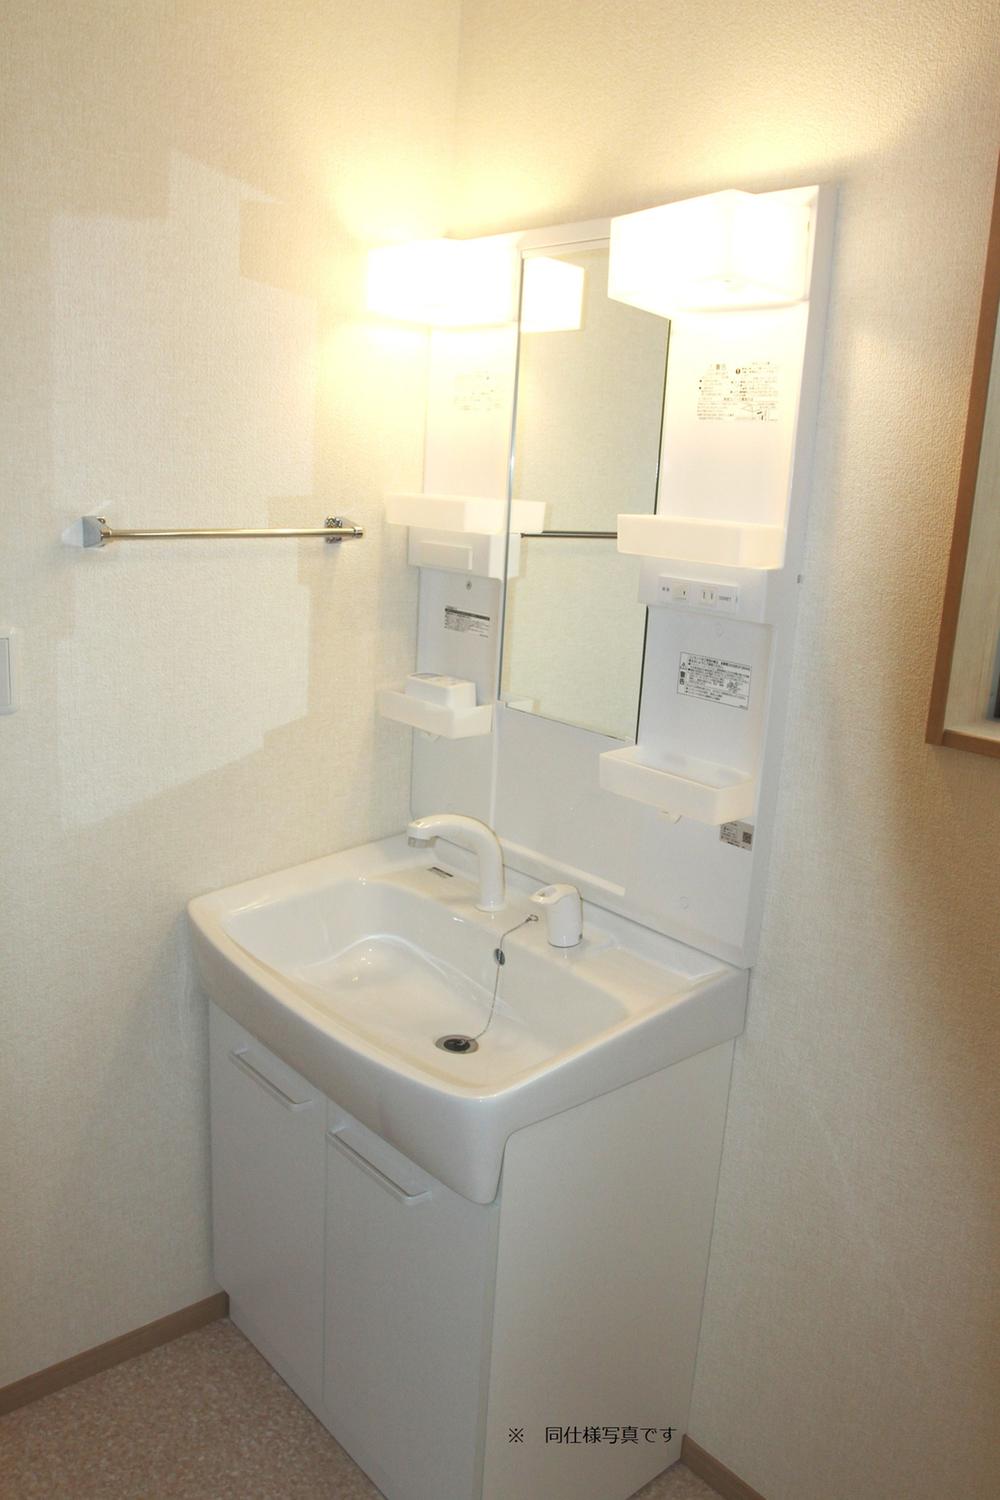 Wash basin, toilet. Indoor (20